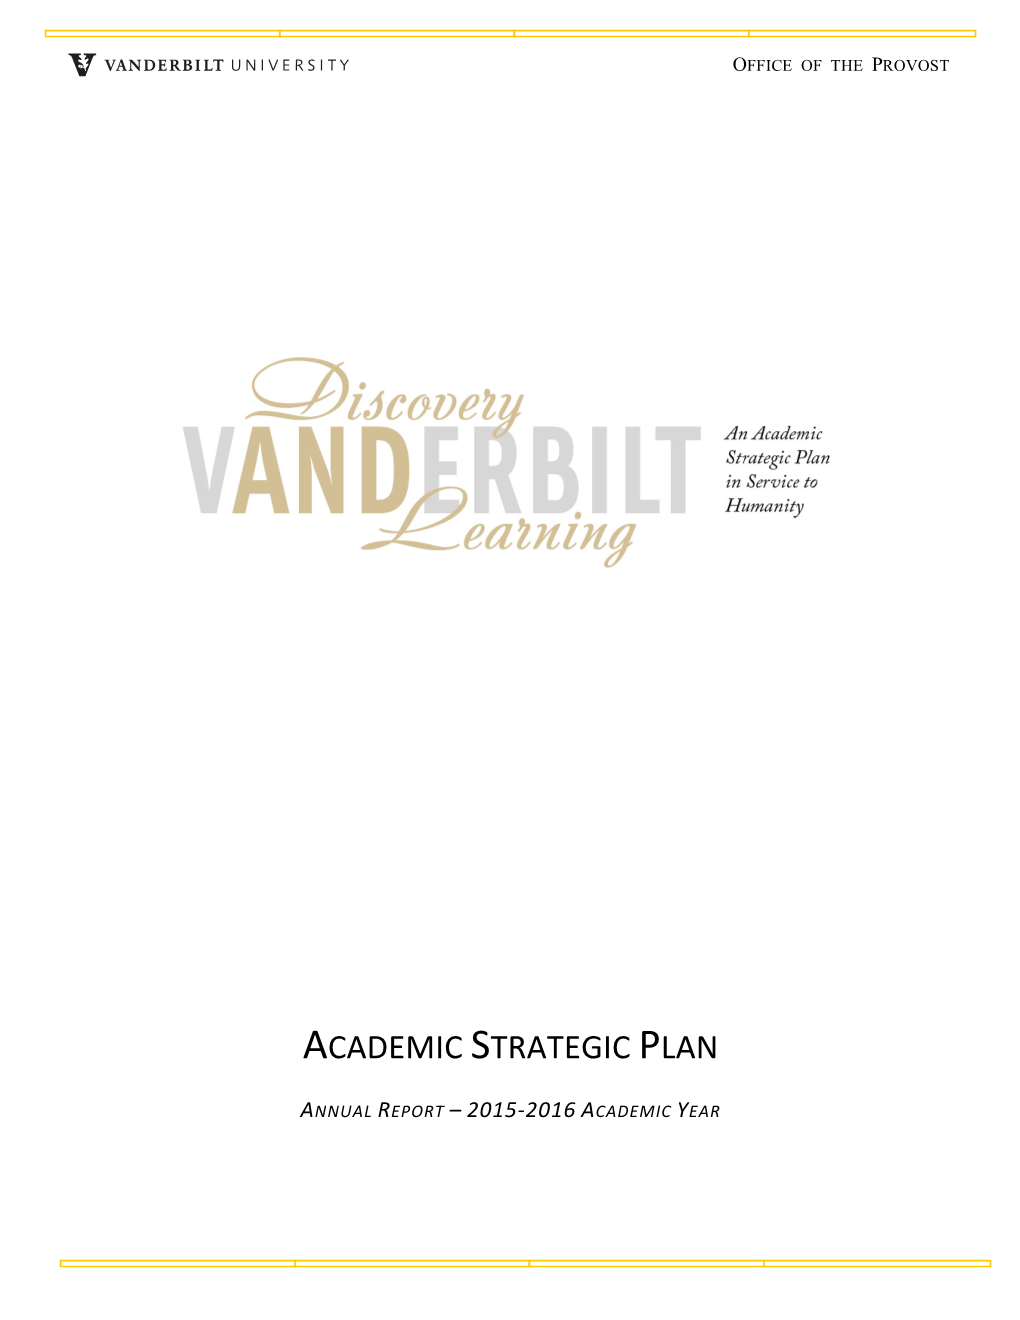 Academic Strategic Plan